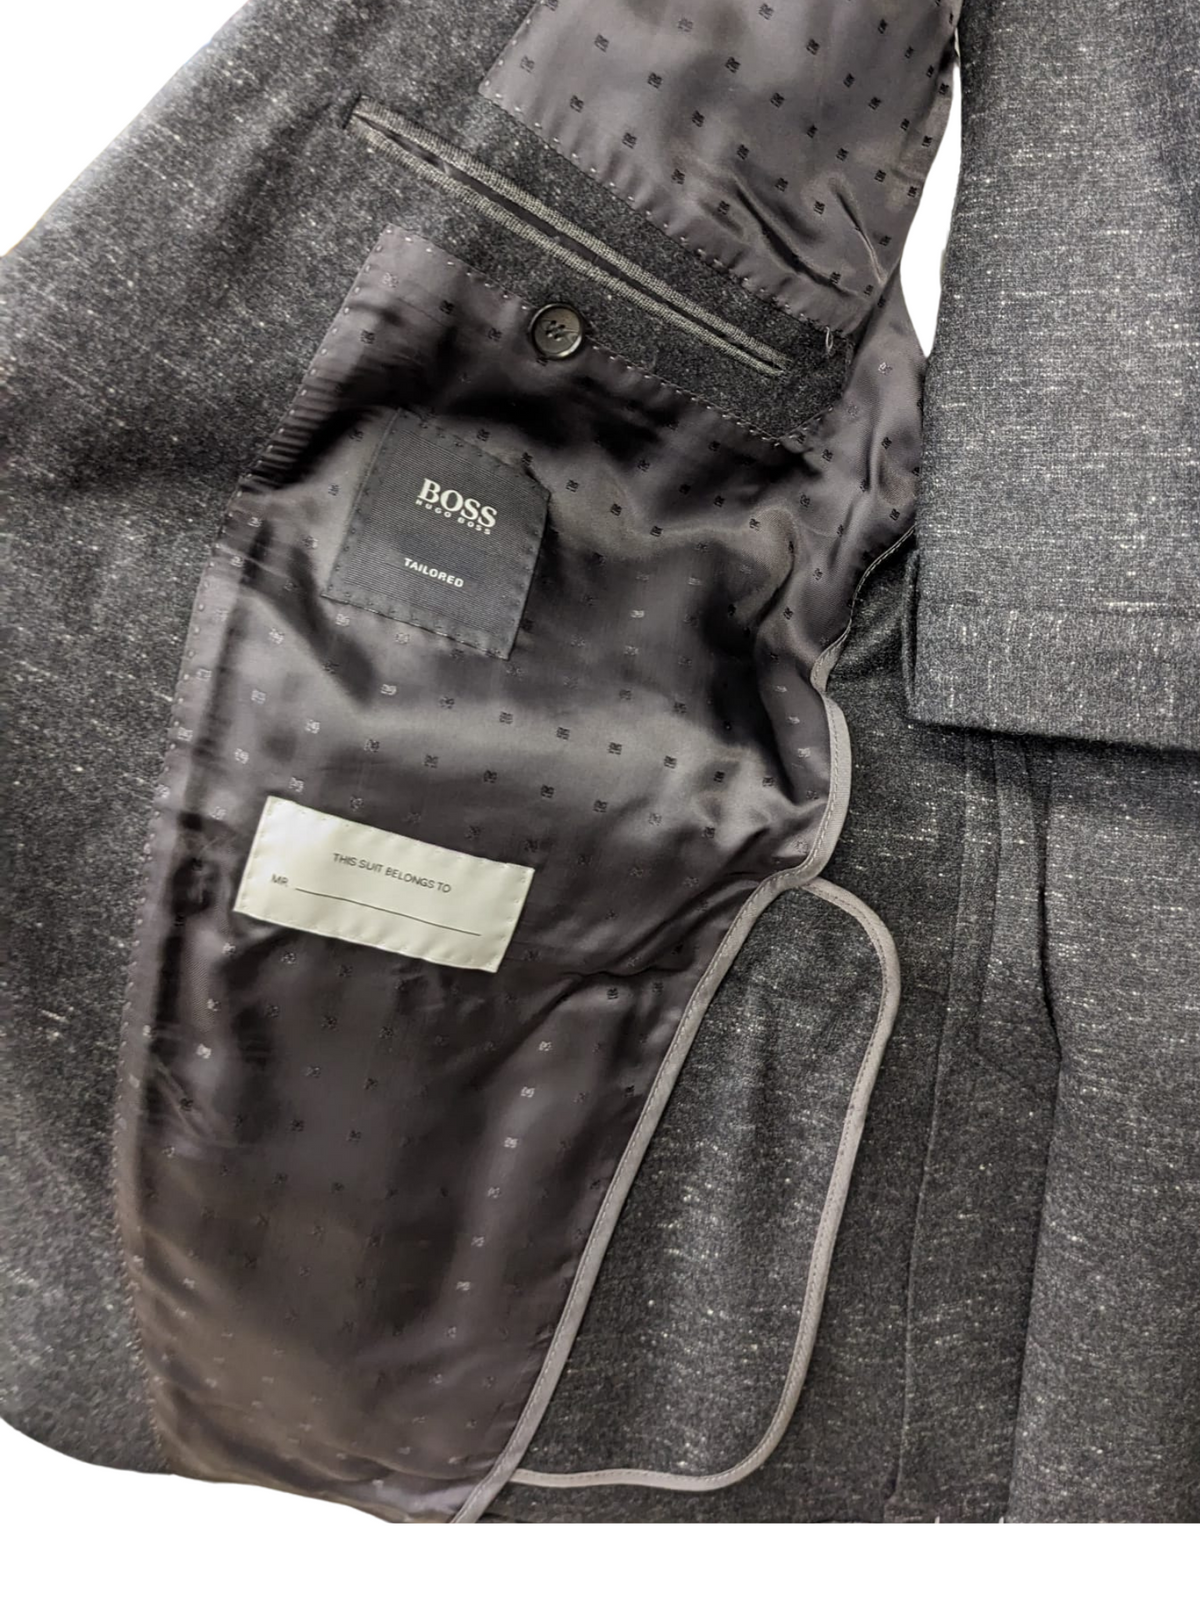 Hugo Boss Mens 38R Black Tailored Fit Wool Cashmere 2 Piece Suit